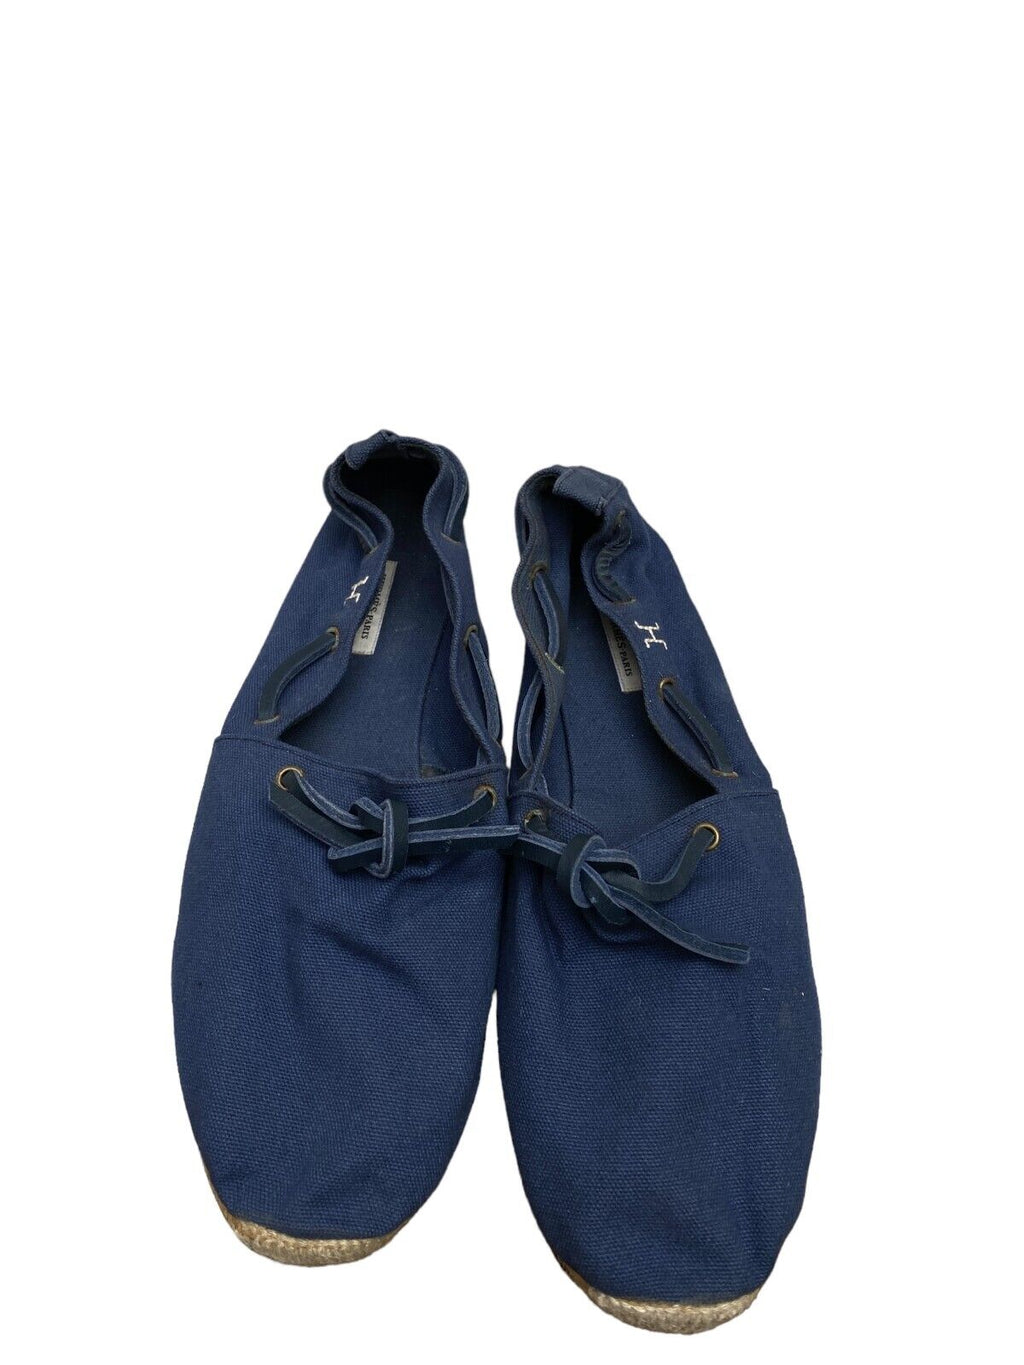 Vintage Blue Espadrilles Size 43 / US 10